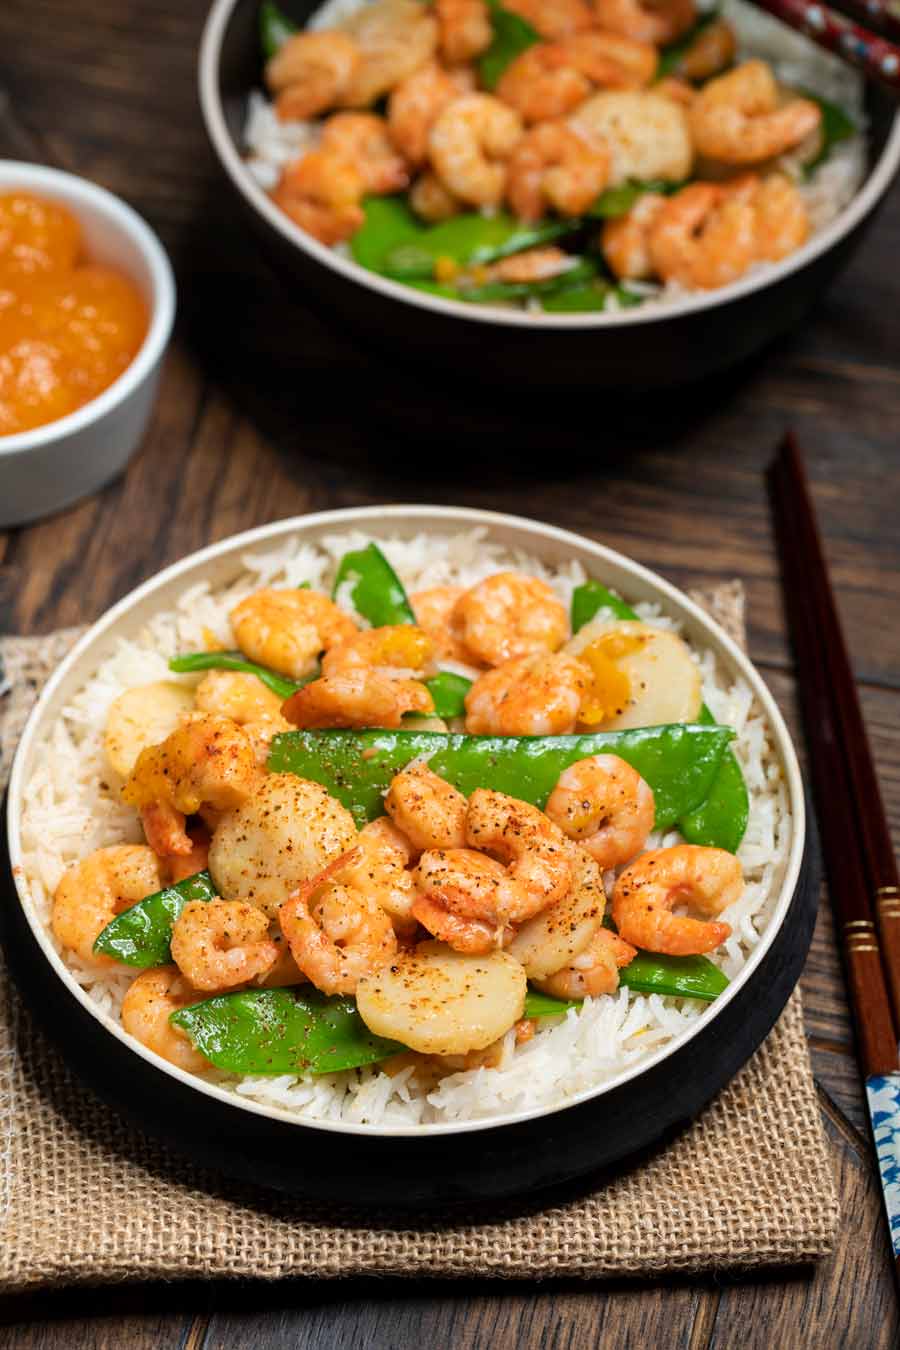 2 bowls of asian stir fry with shrimp and a side of orange marmalade.